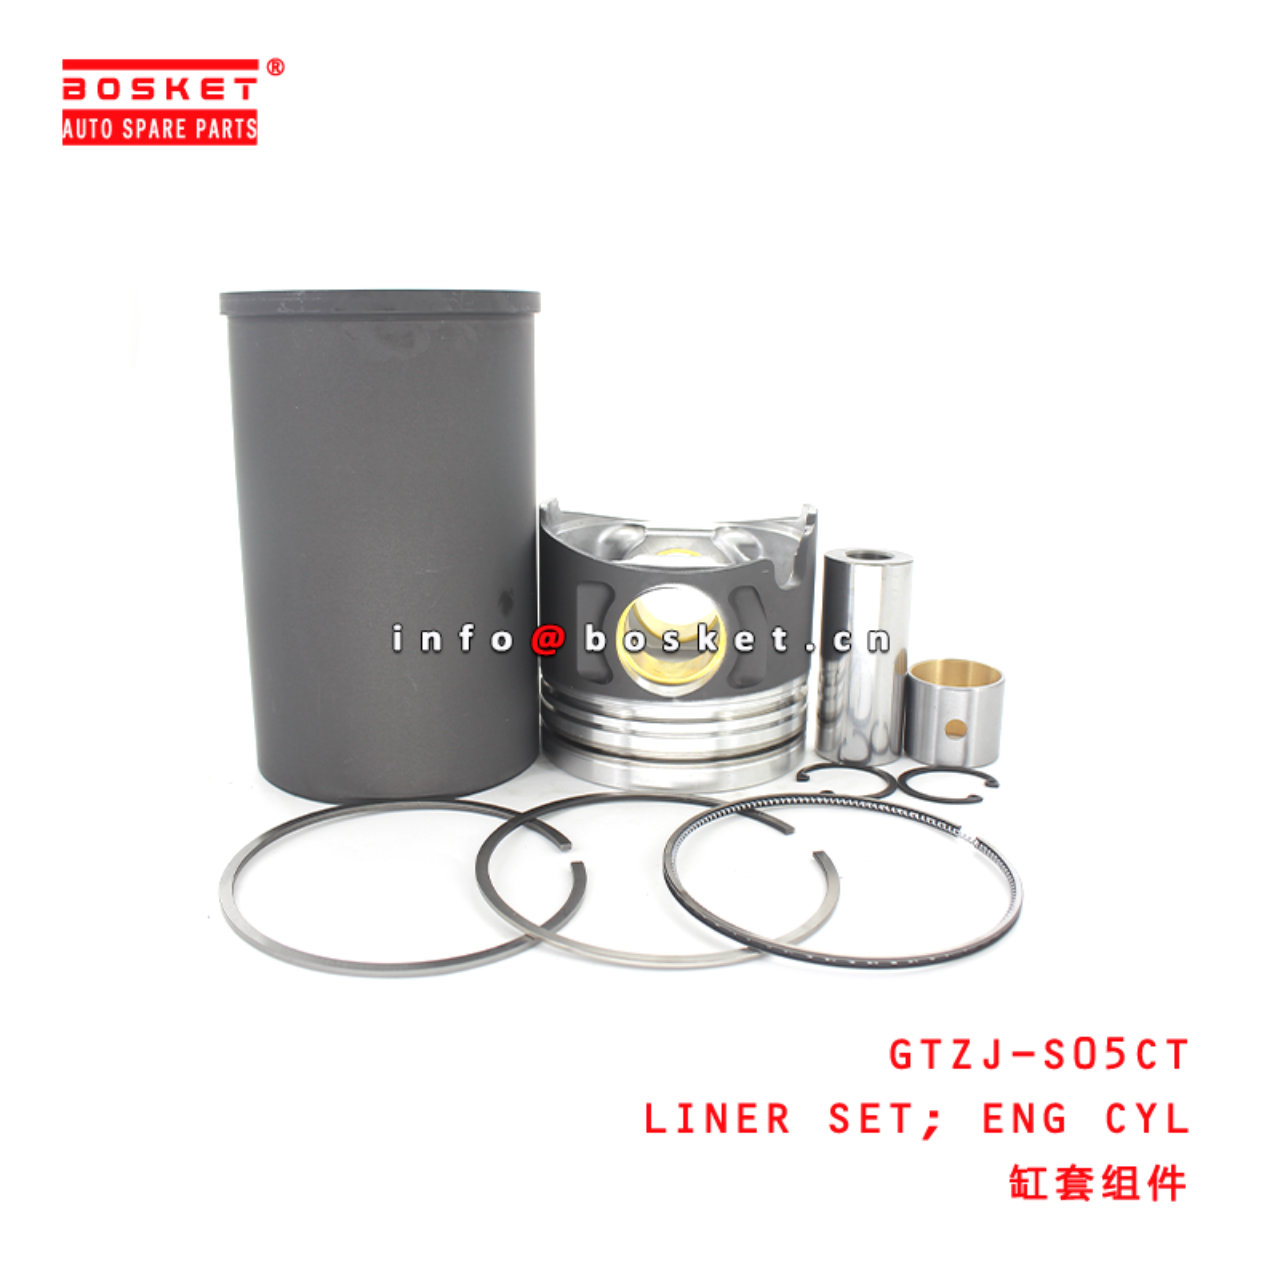 GTZJ-S05CT Engine Cylinder Liner Set Suitable for ISUZU 700P S05CT